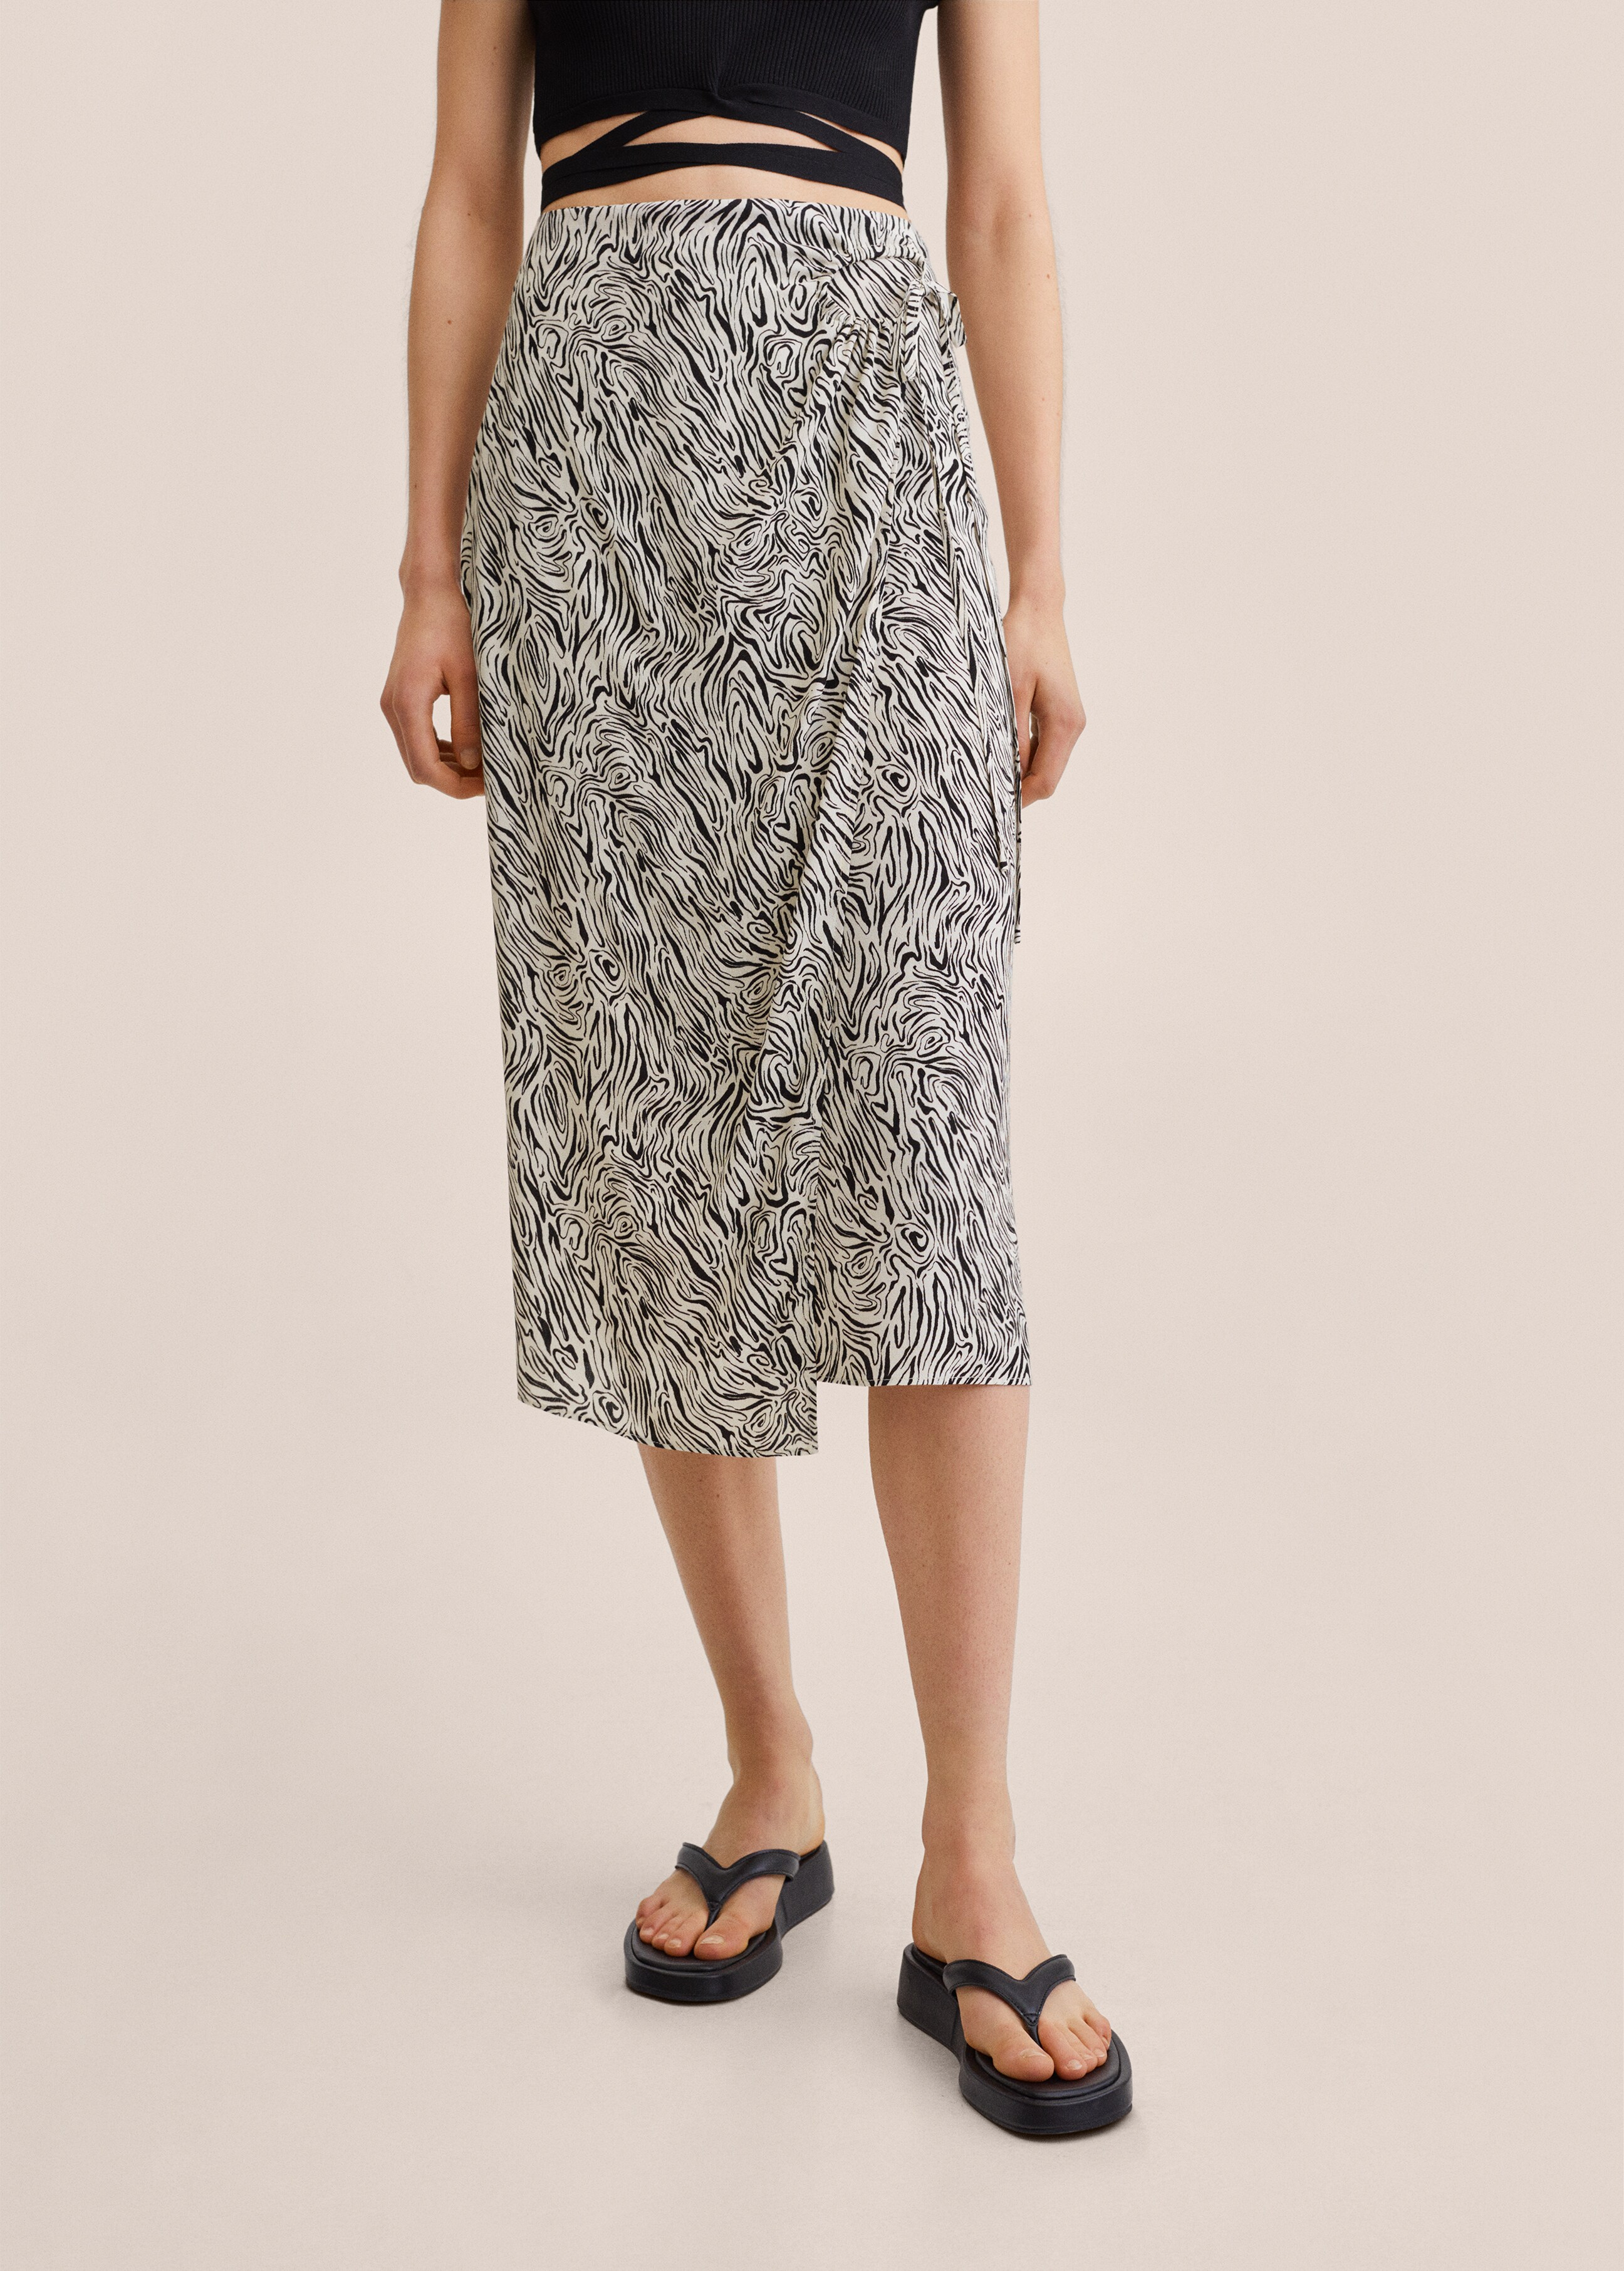 Wrap print skirt - Medium plane